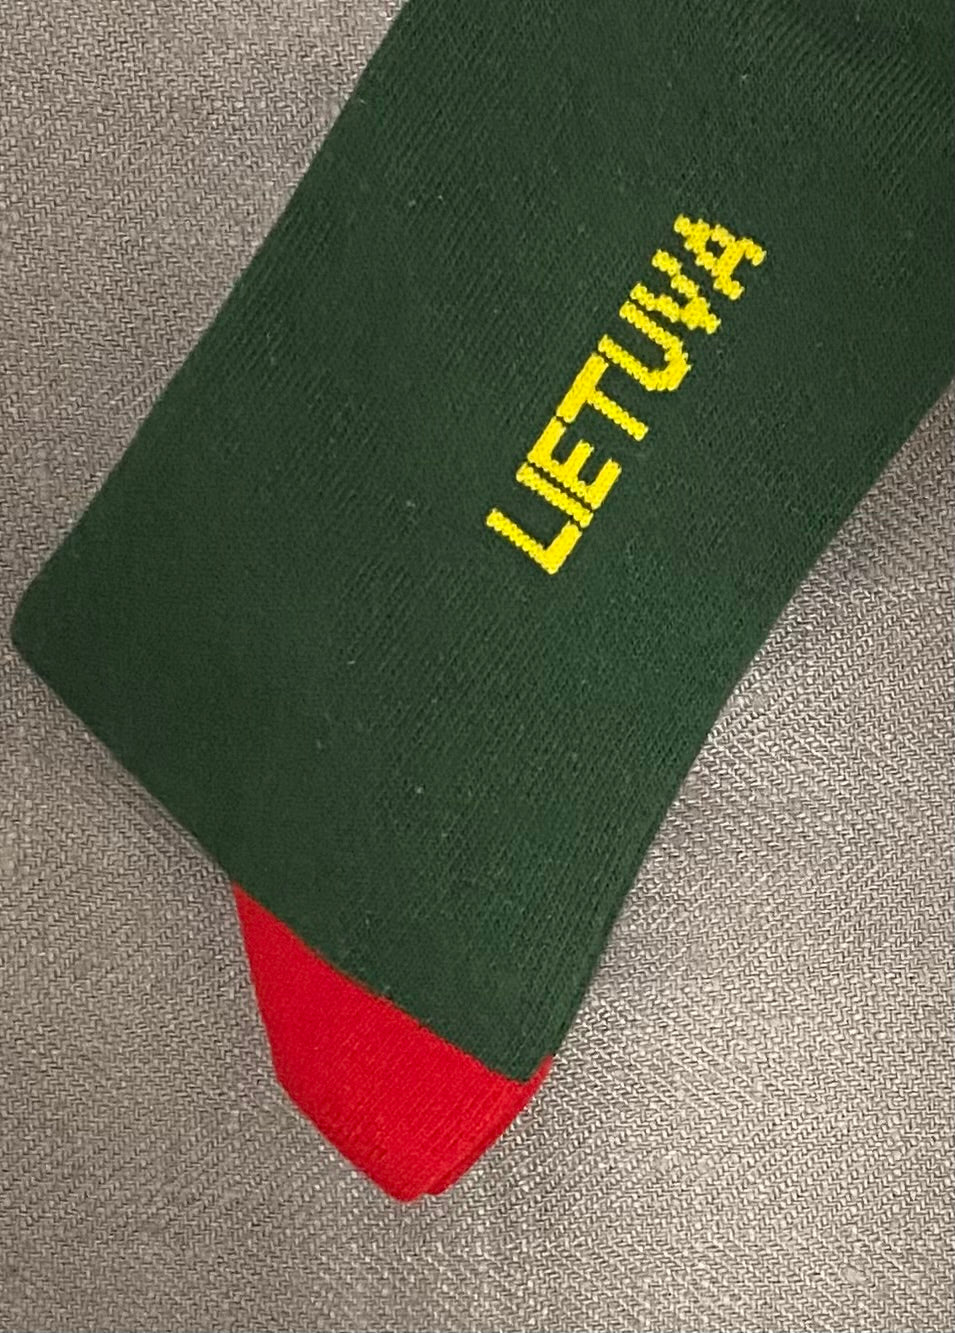 Men's Socks "Lietuva"